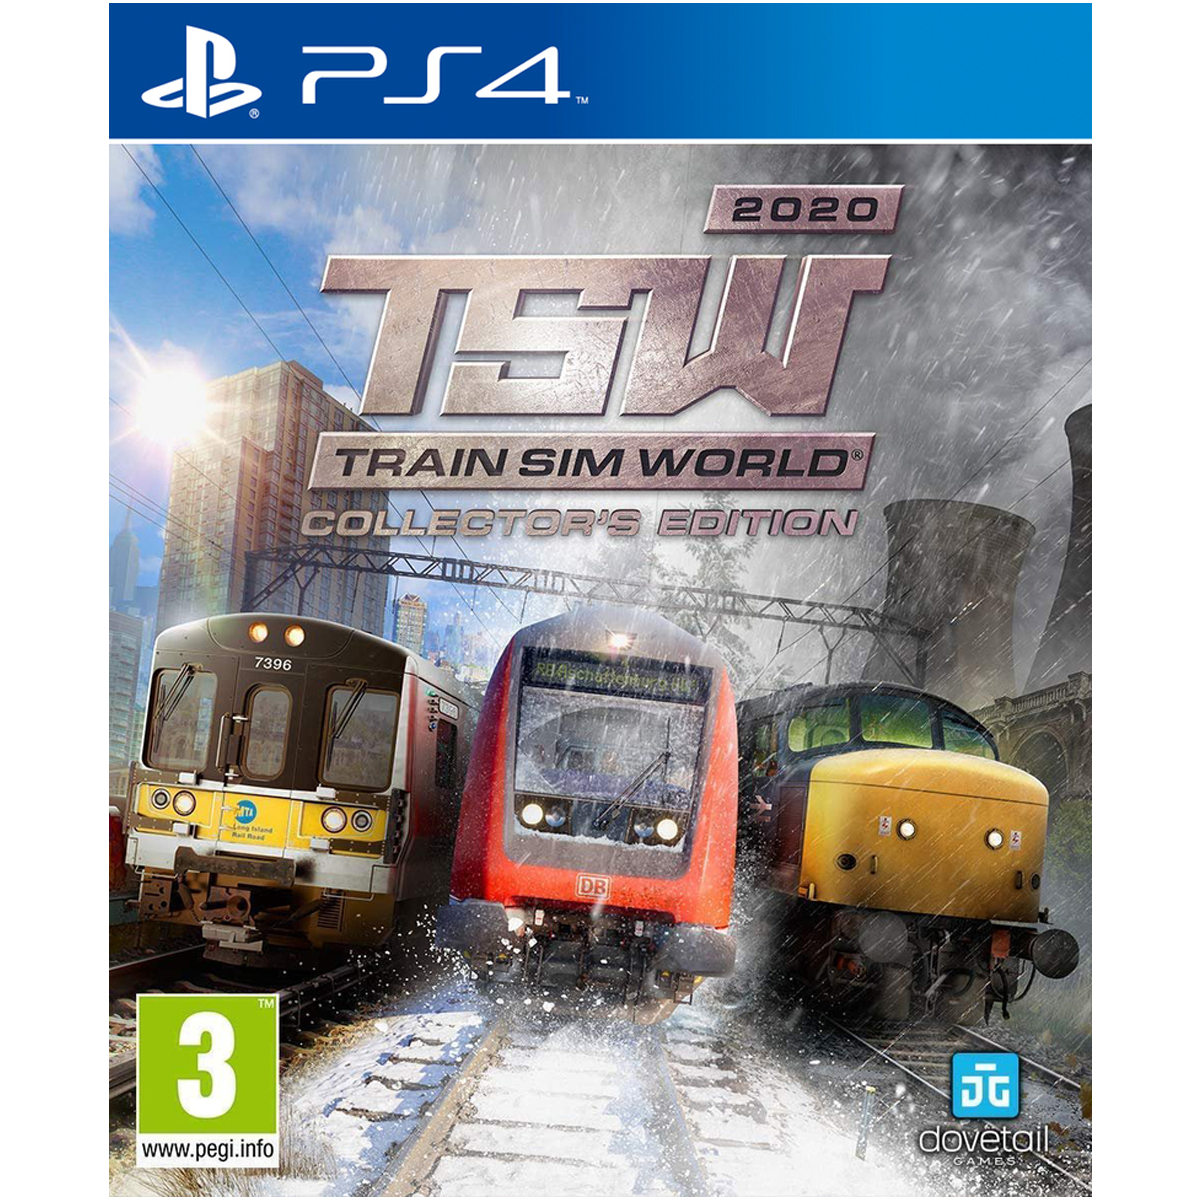 Train Sim World 2020: Collector's Edition - Standard